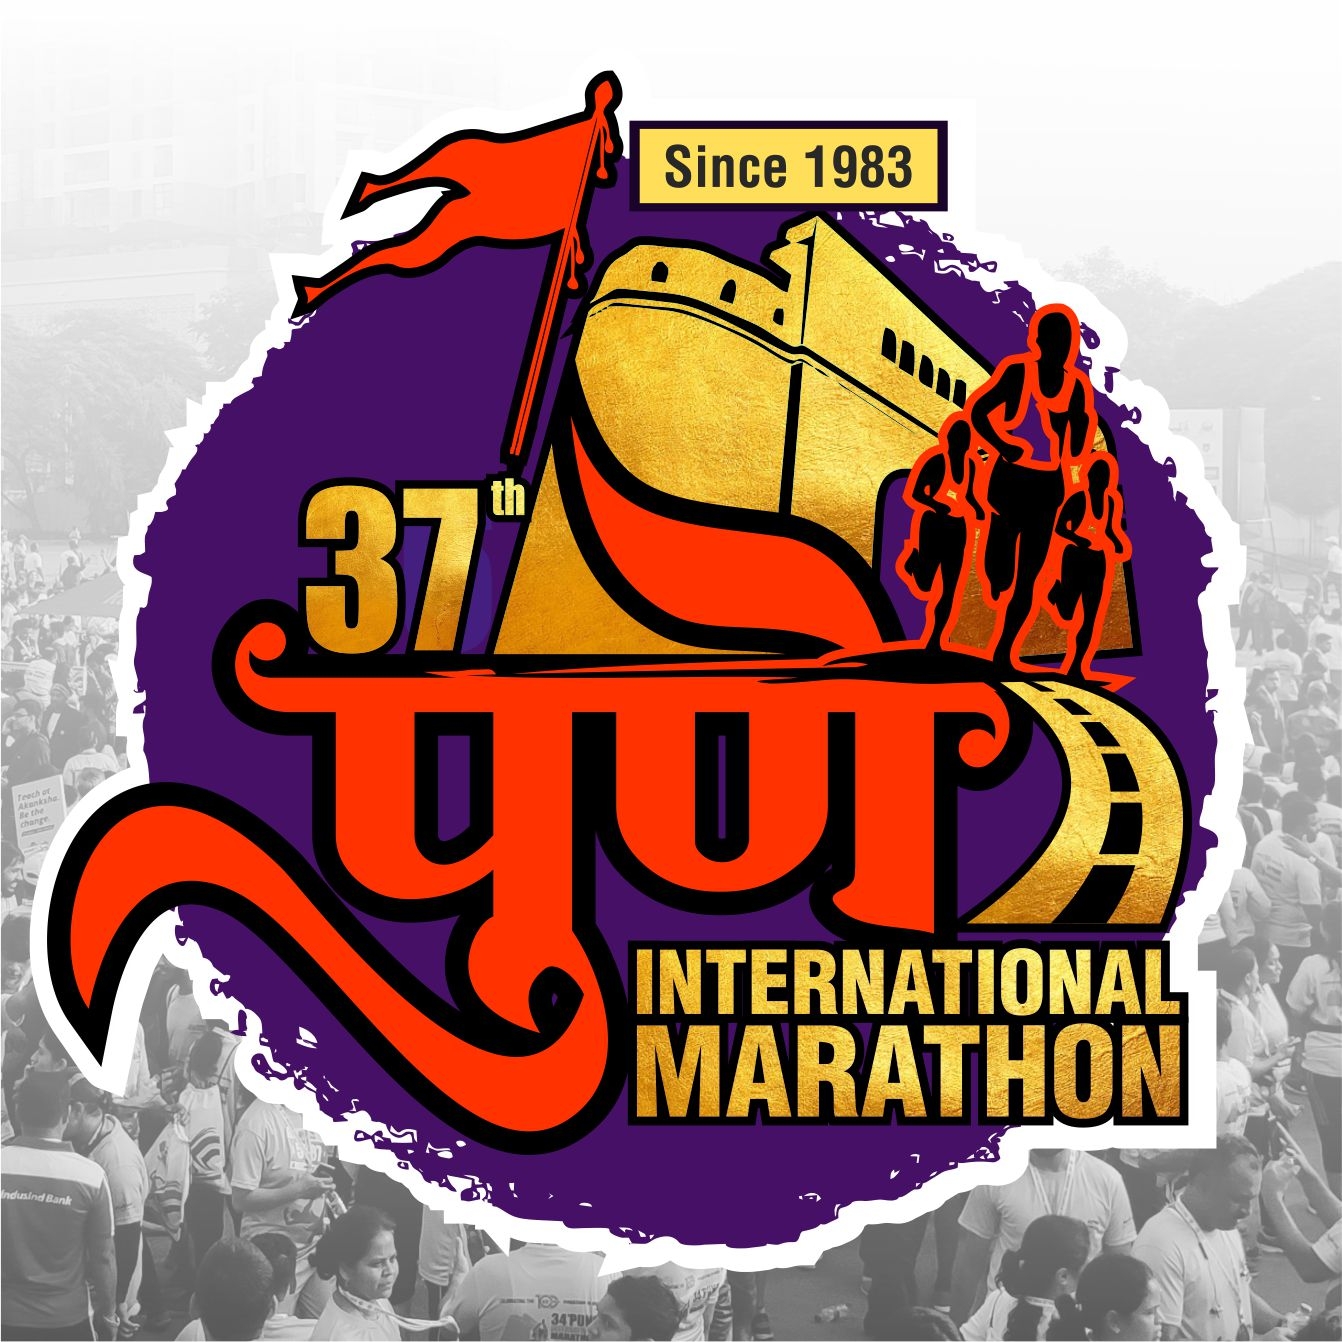 Pune International Marathon Trust